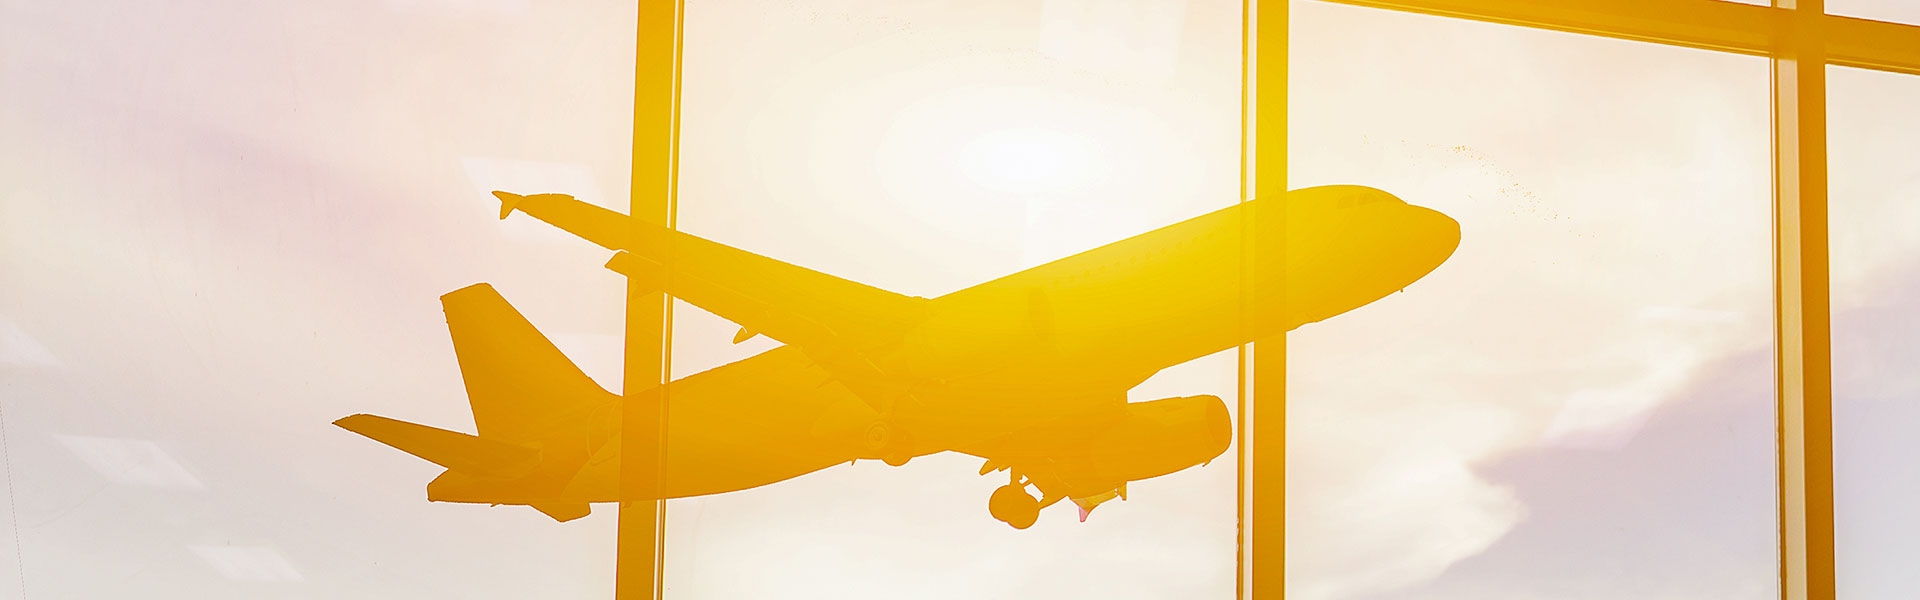 Okanagan Limousine provides private executive airport transfers.